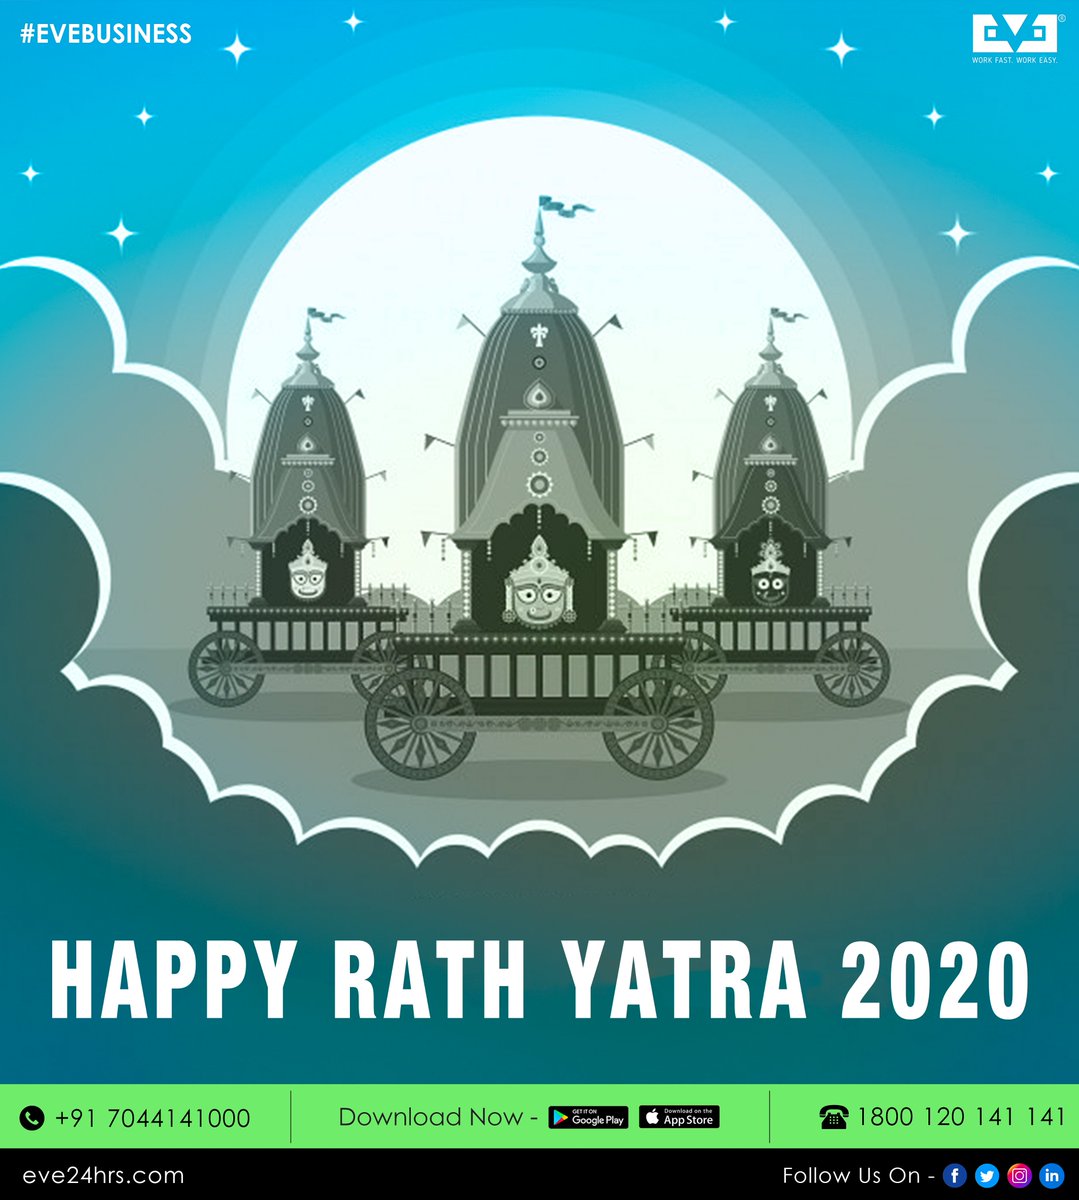 May Lord Jagannath bless us all!
#HappyRathyatra2020 #RathYatra #Rathyatra2020 #RathaJatra #PuriJagannathRathYatra #PuriRathYatra